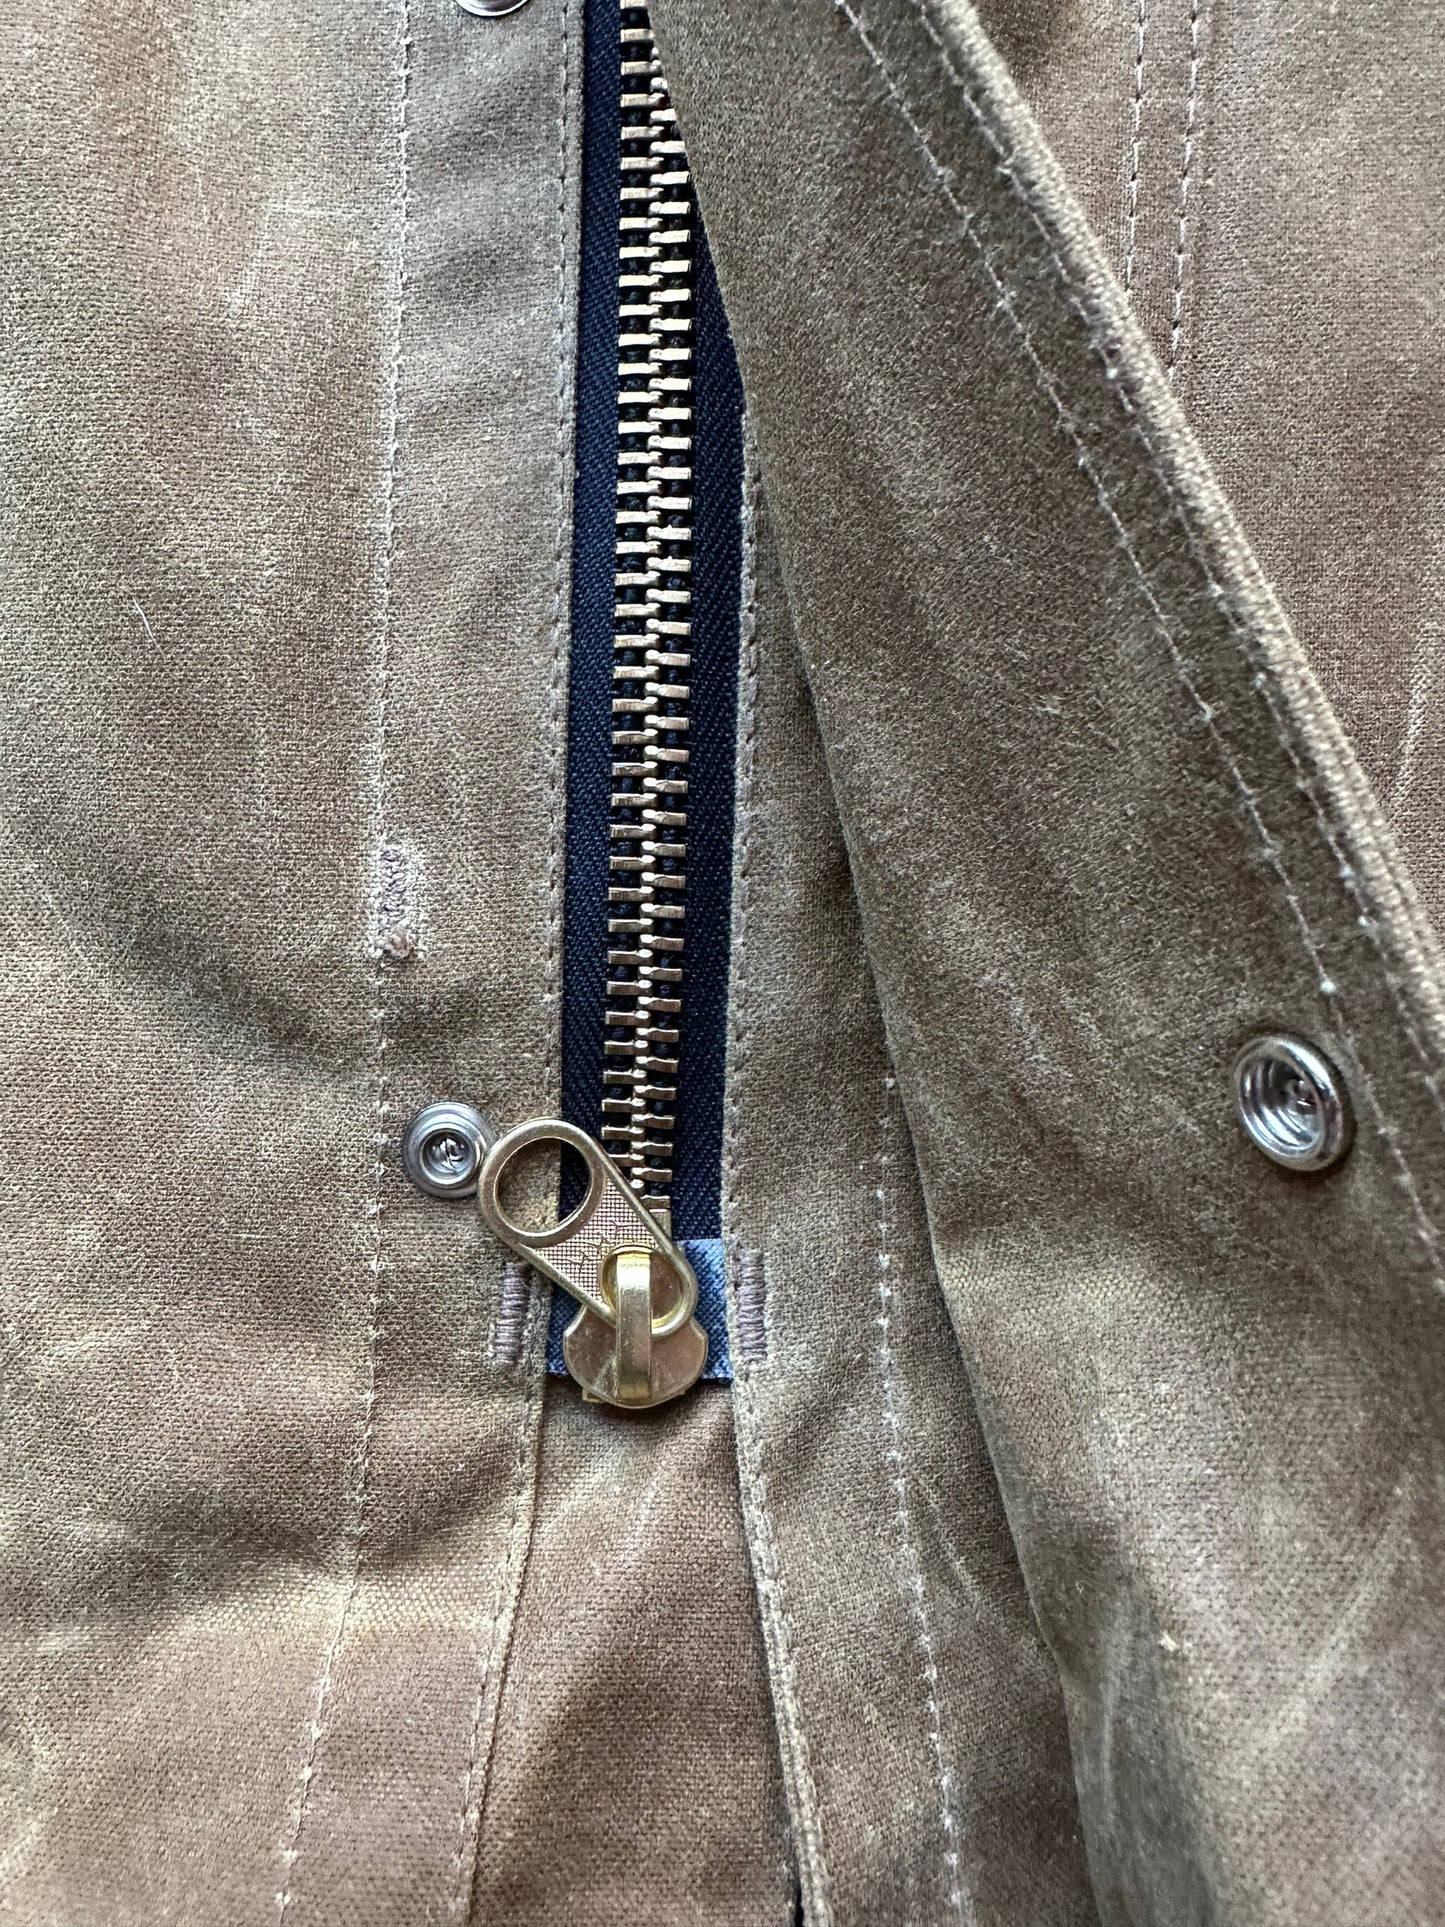 Zipper View of NWT Filson Tin Packer Coat SZ XL |  Barn Owl Vintage Goods Filson | Vintage Filson Tin Cloth Workwear Seattle